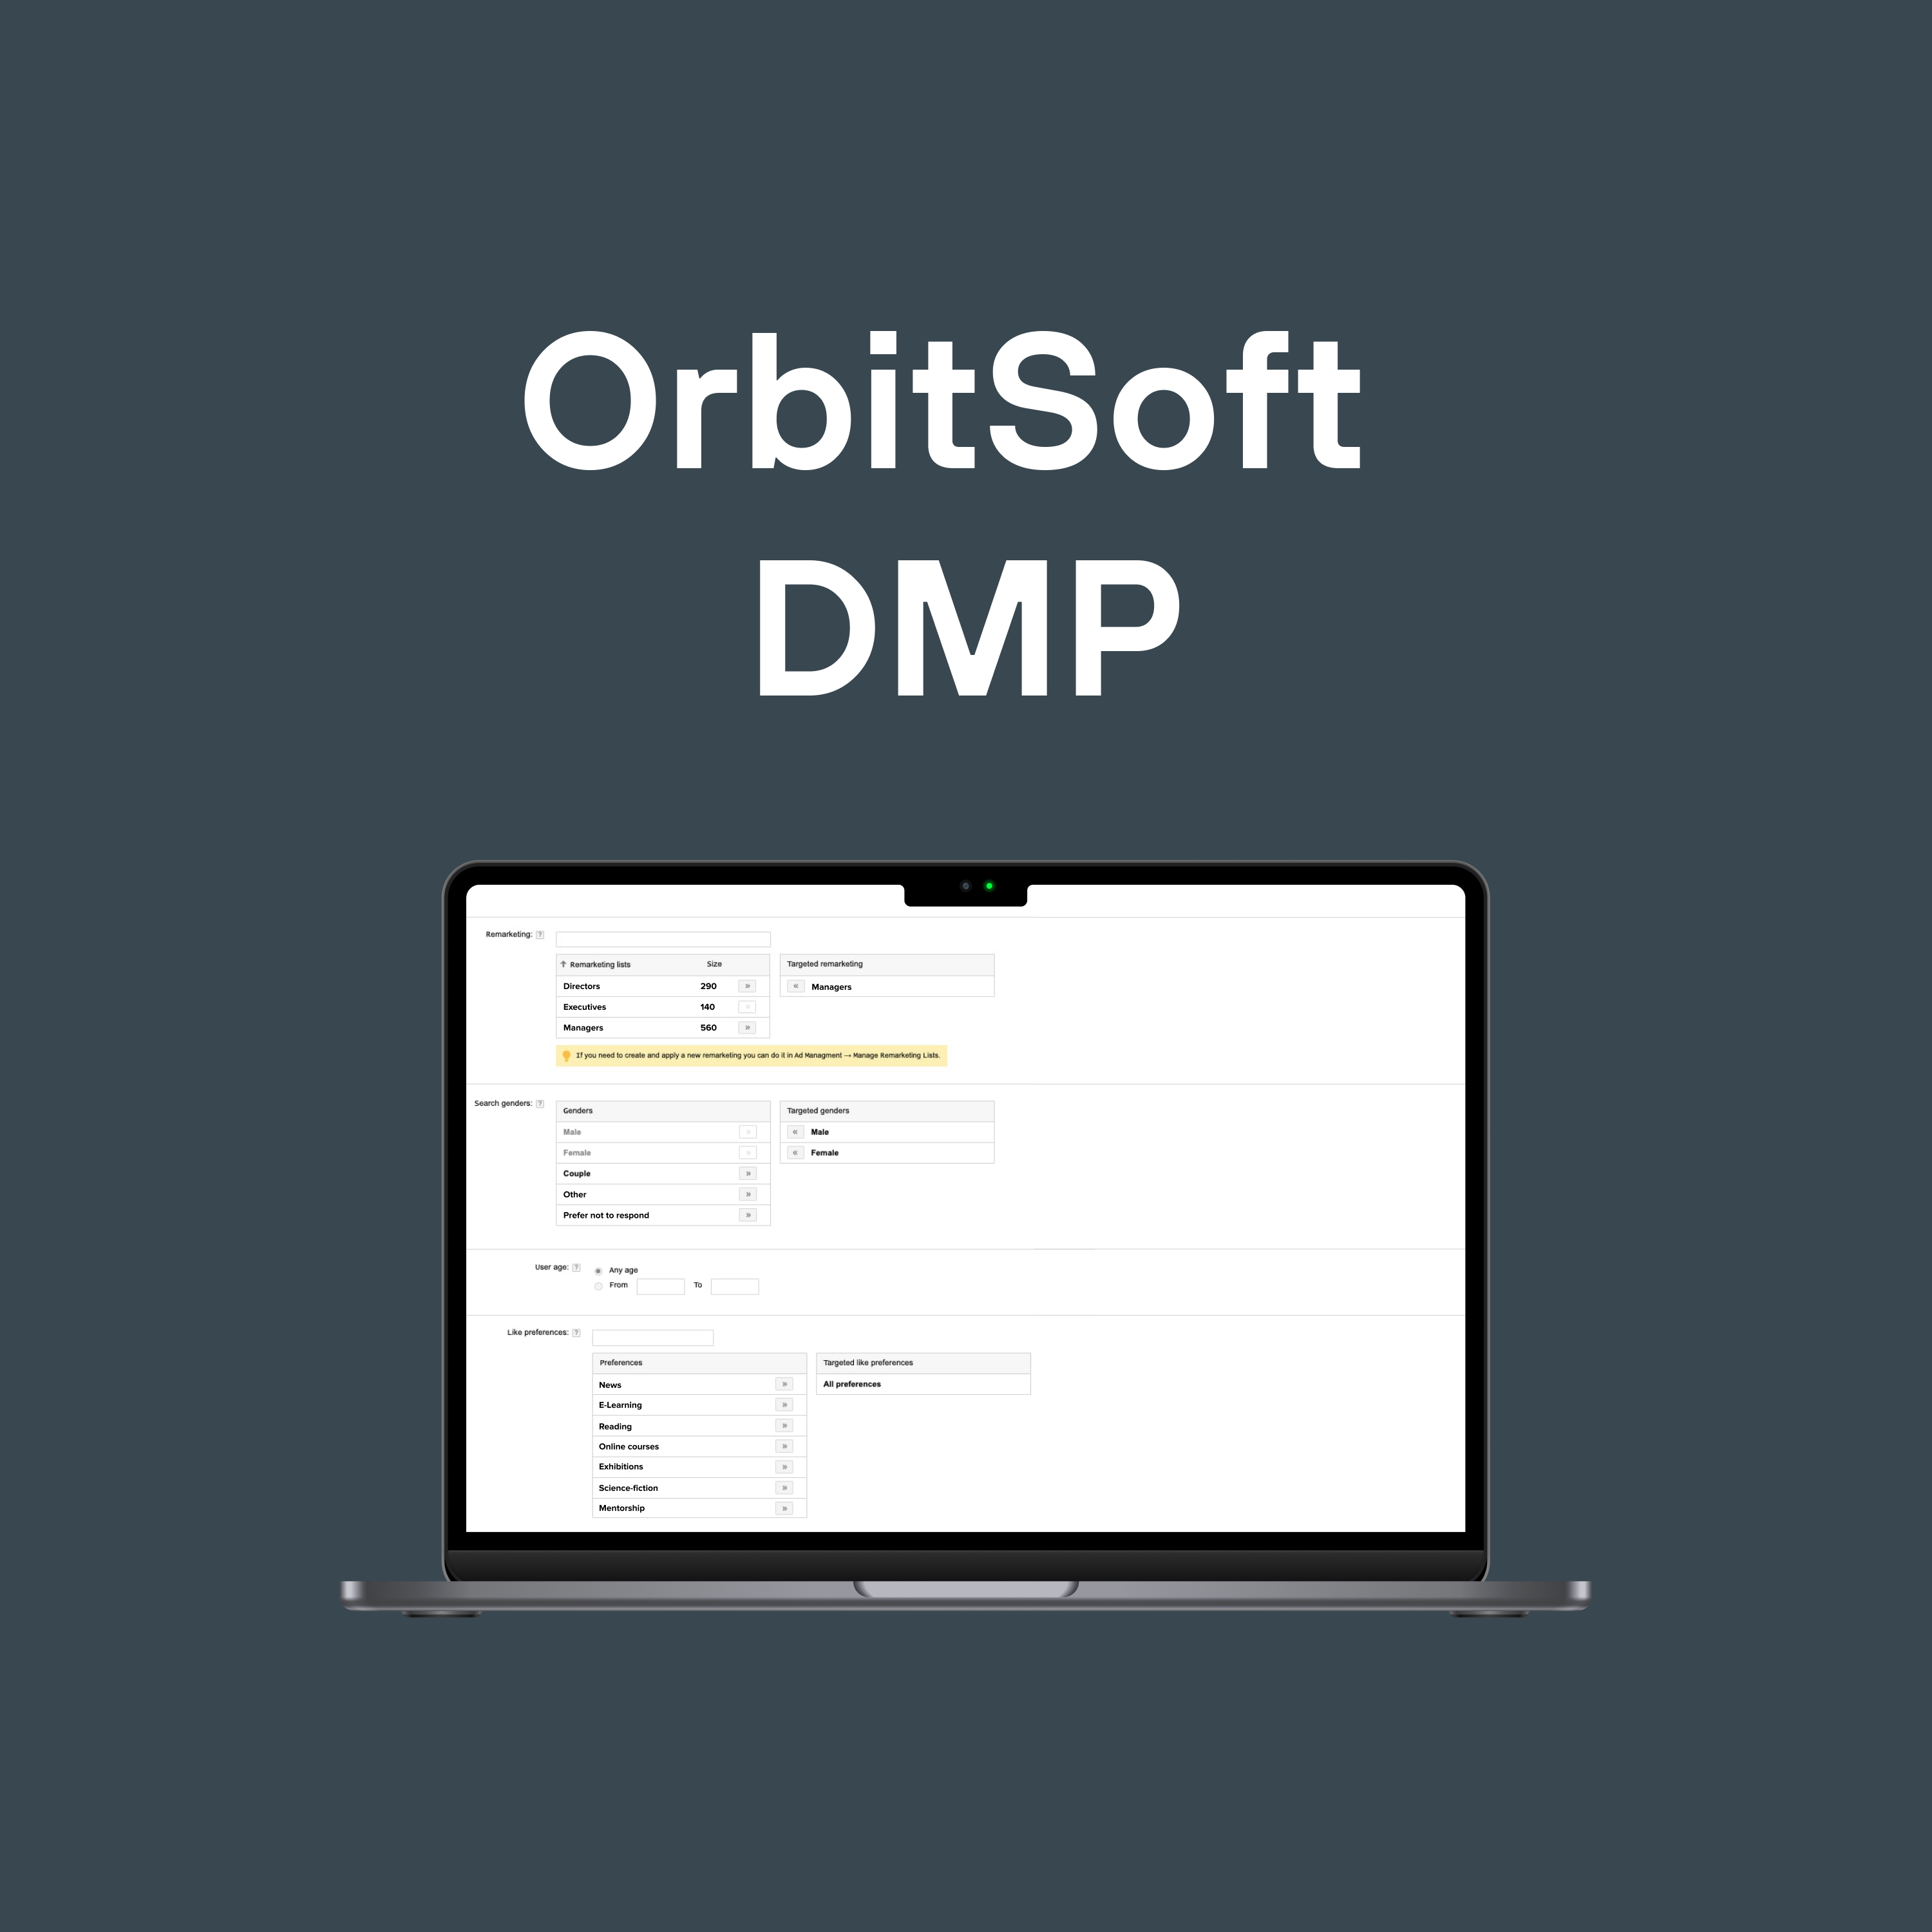 DMP — Data Management Platform